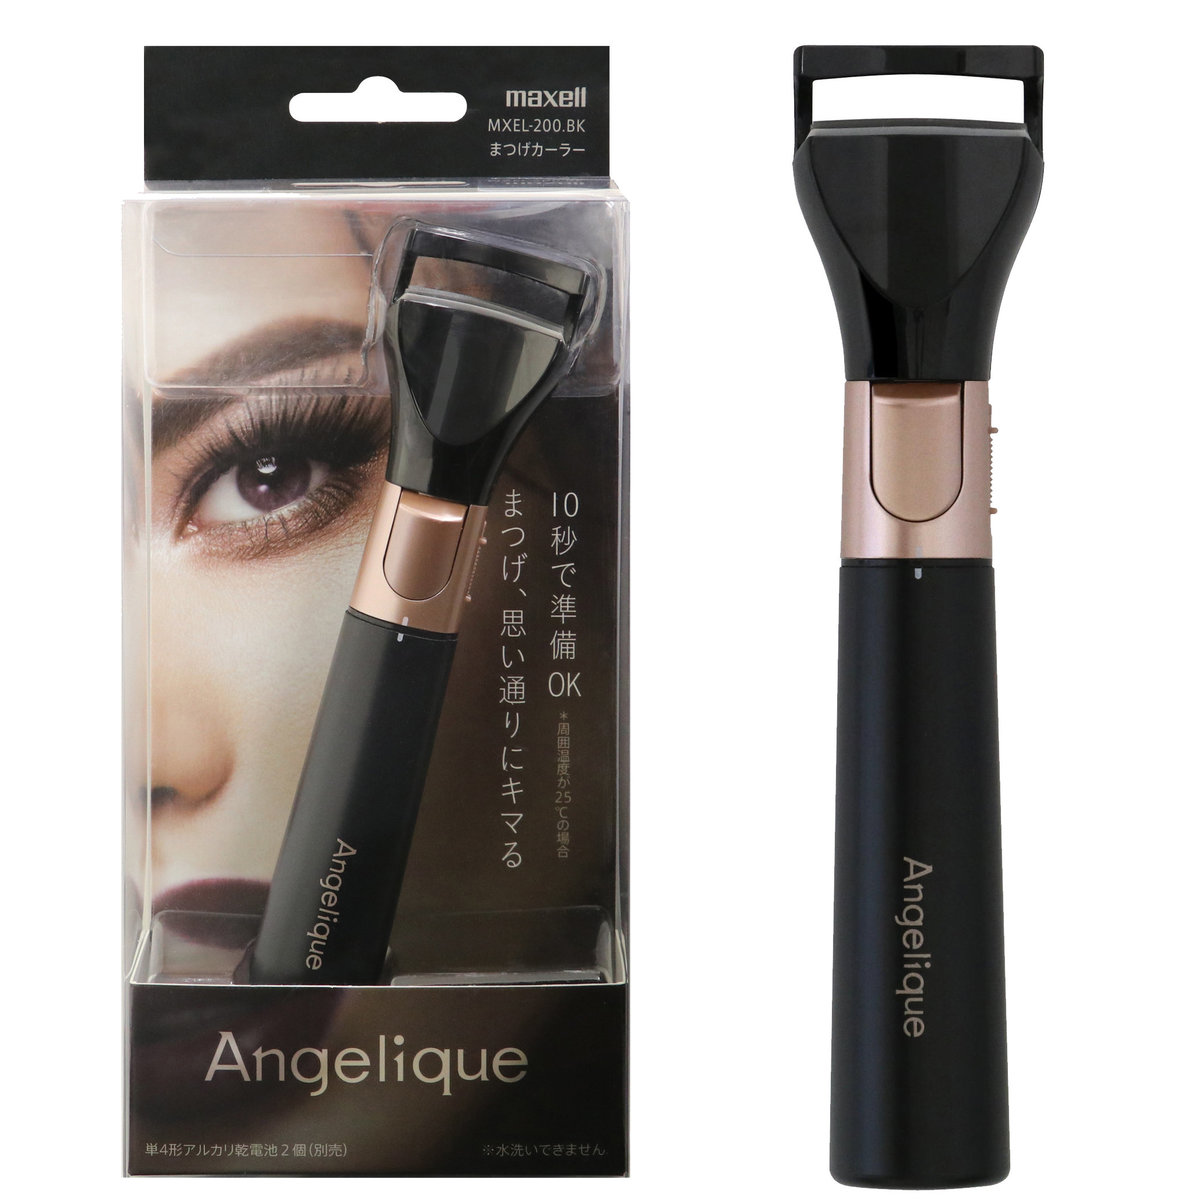 Angelique Electric Eyelash Curler (Black) MXEL-200｜Heated Eyelash Curler｜Eyelash Beauty Device